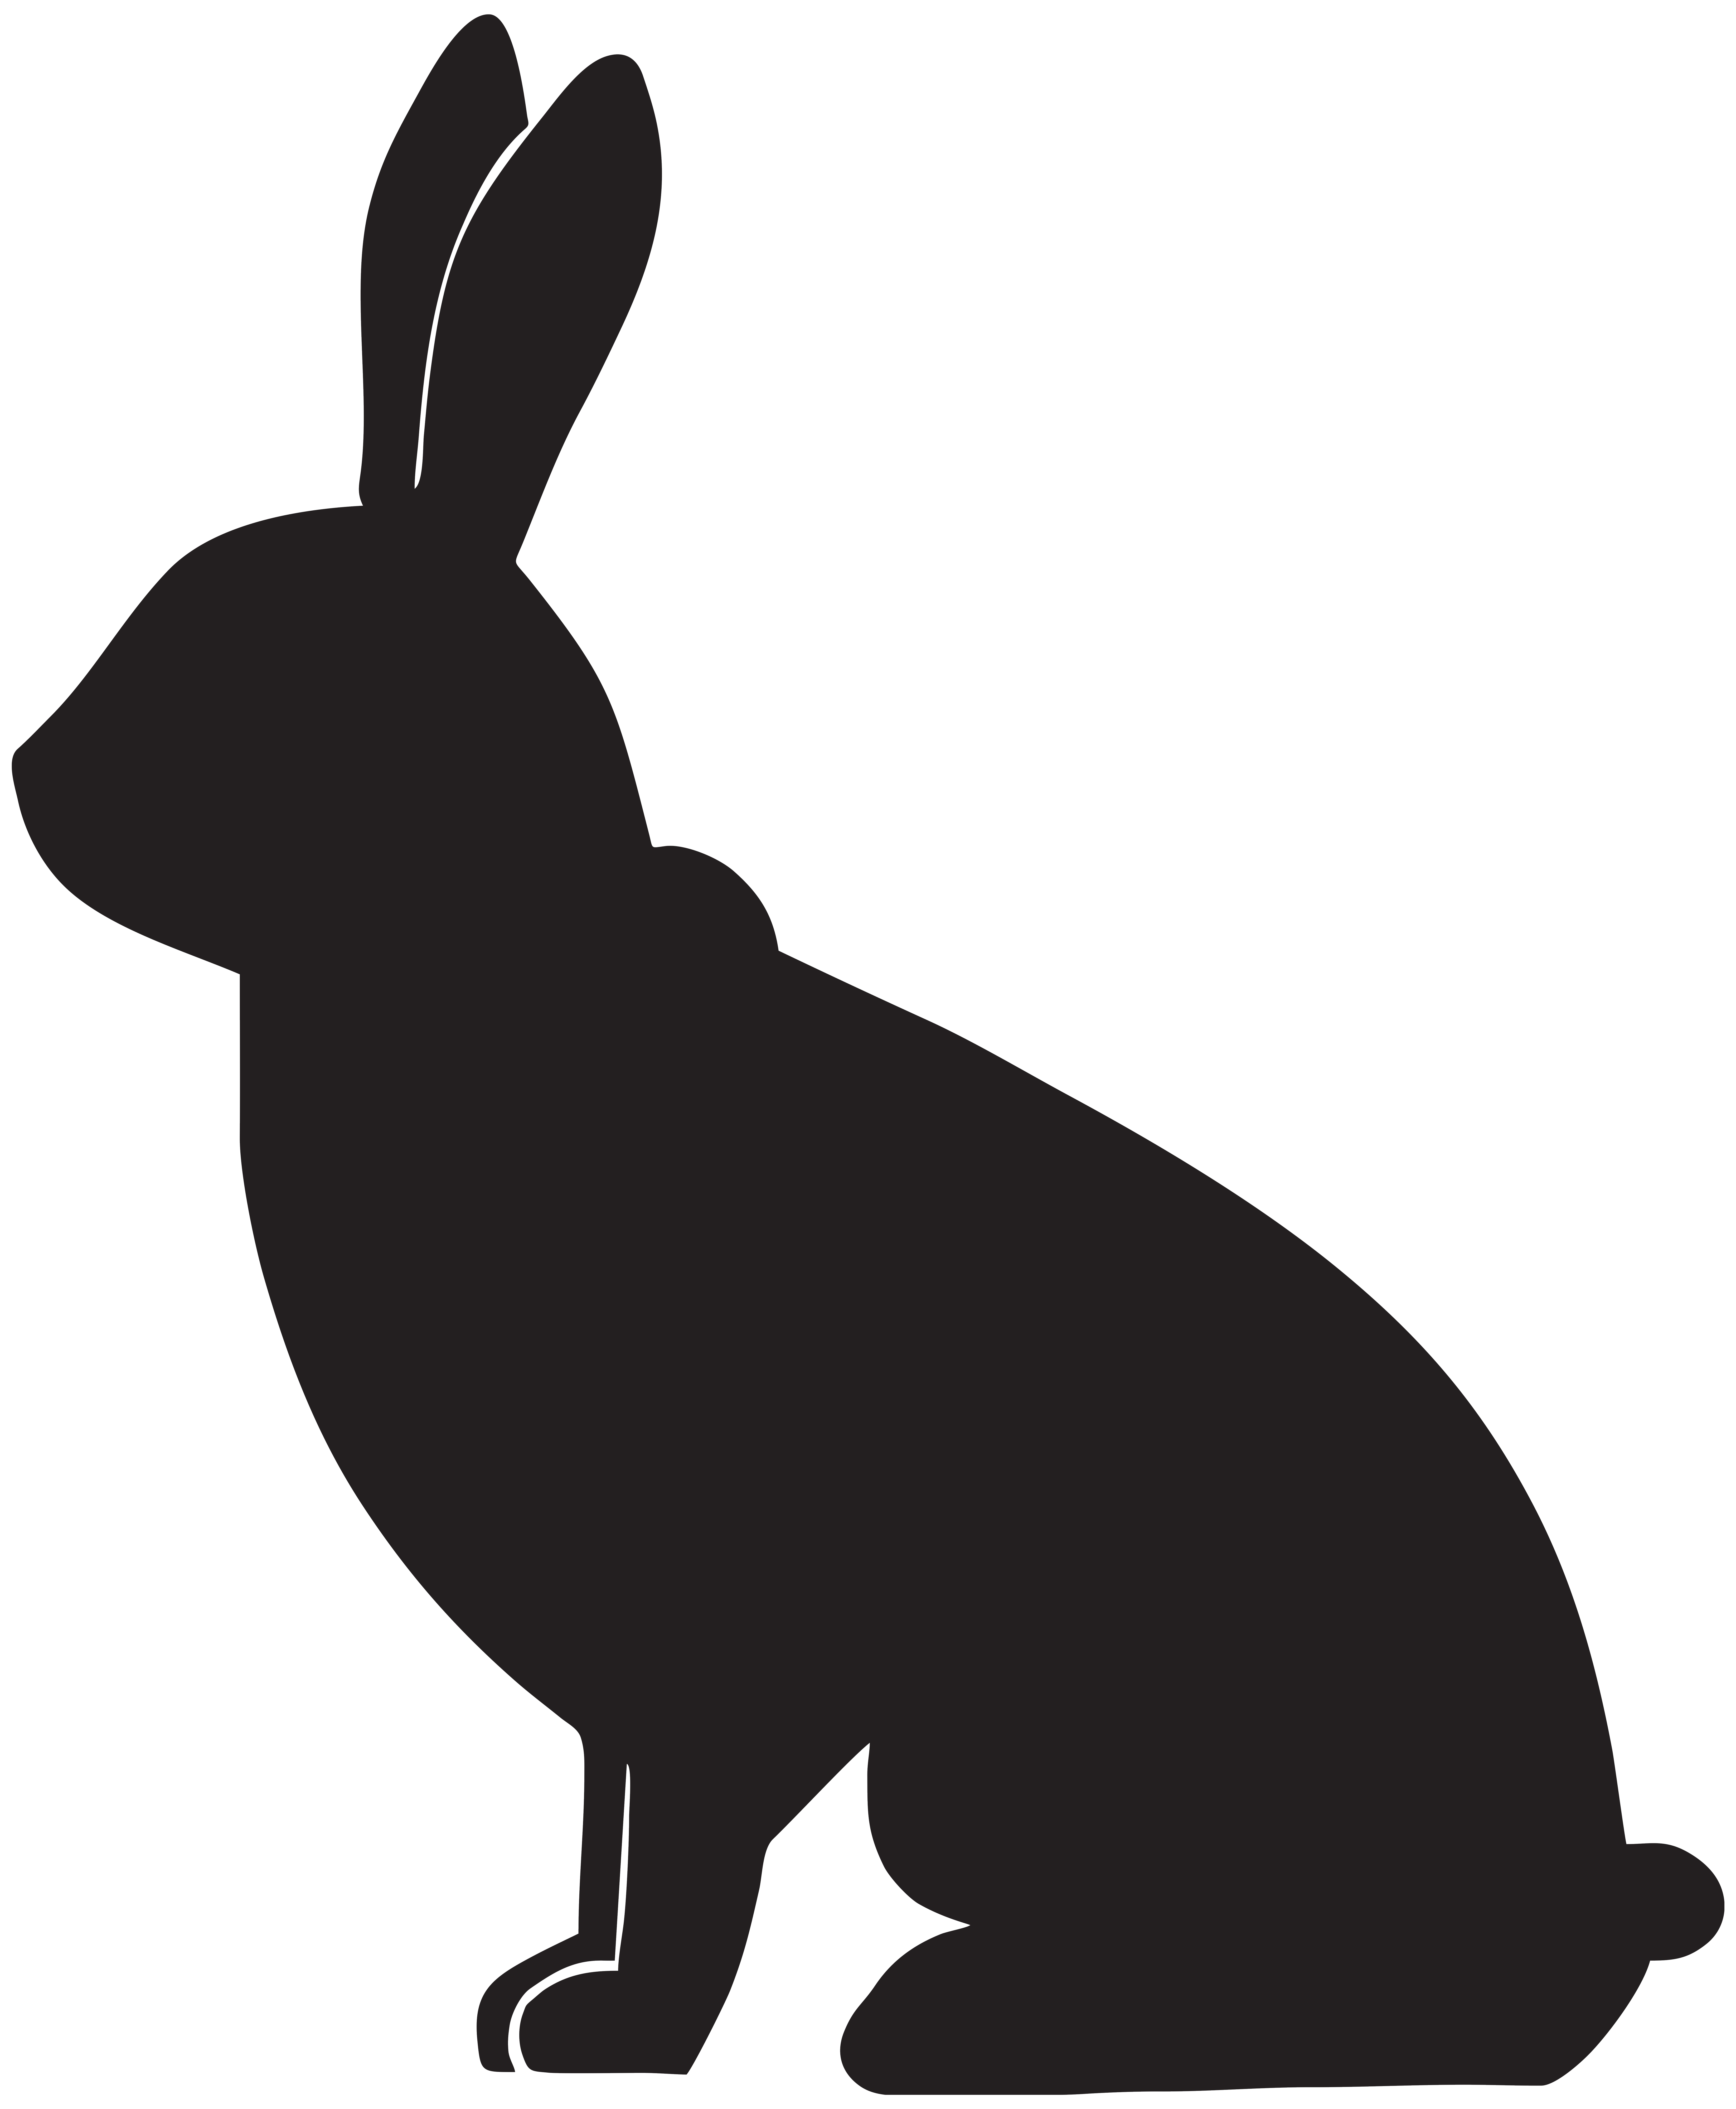 Rabbit Silhouette PNG Clip Art Image 